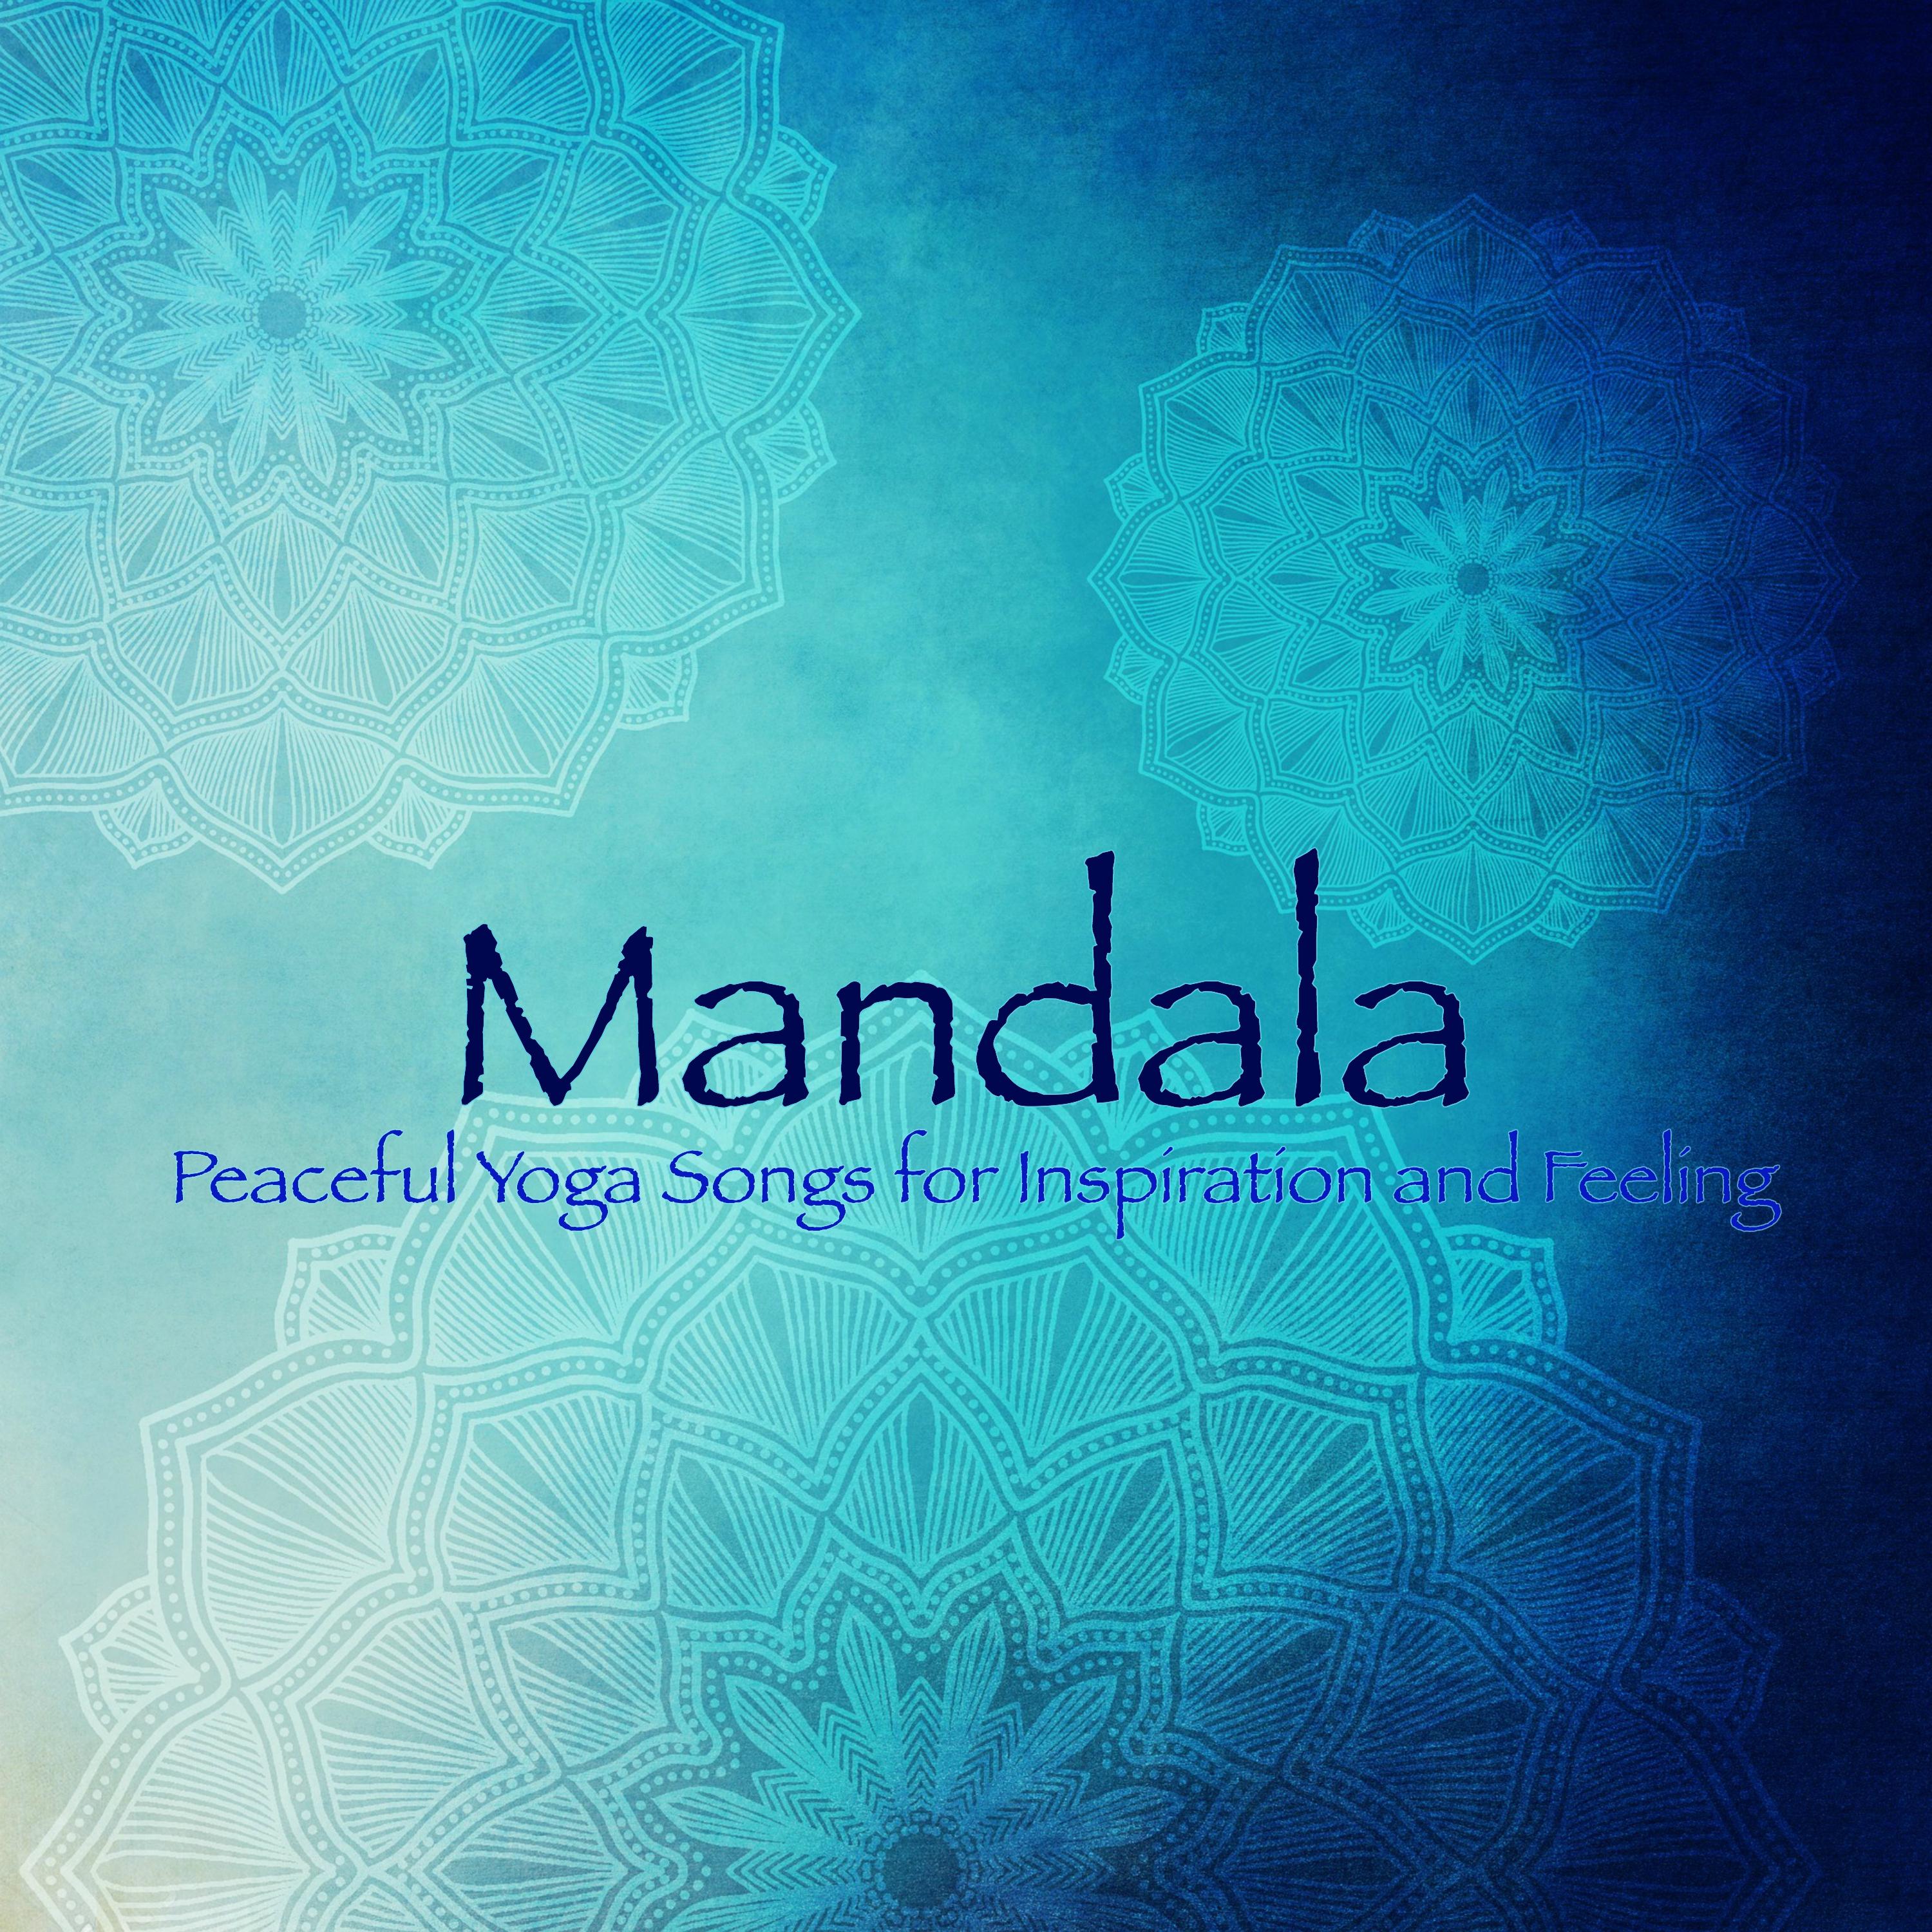 Mandala – Peaceful Yoga Songs for Inspiration and Feeling